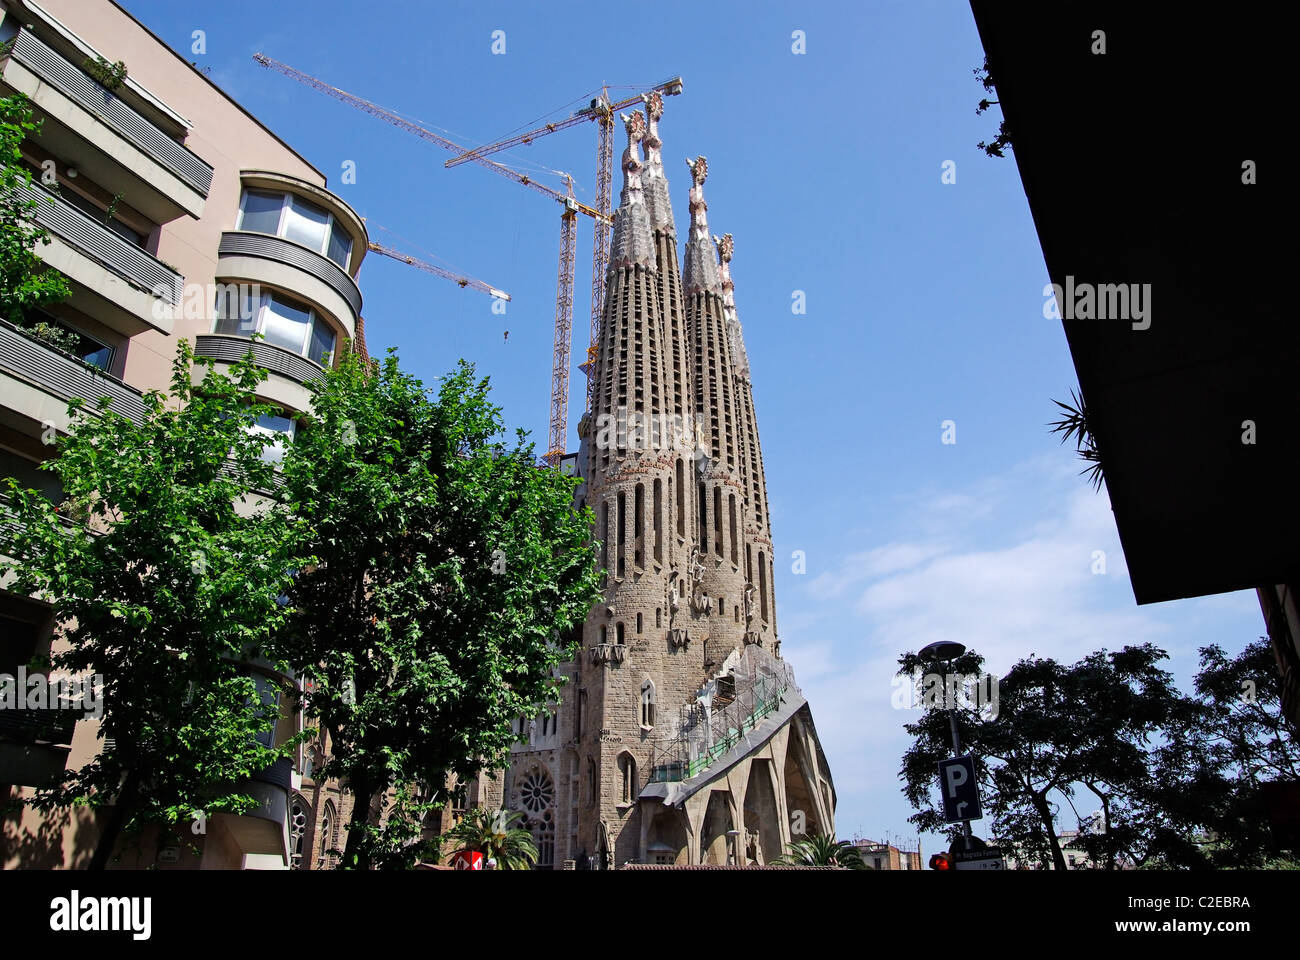 Sagrada Familia church with apartments nearby. Barcelona, Spain. 2009 Stock Photo